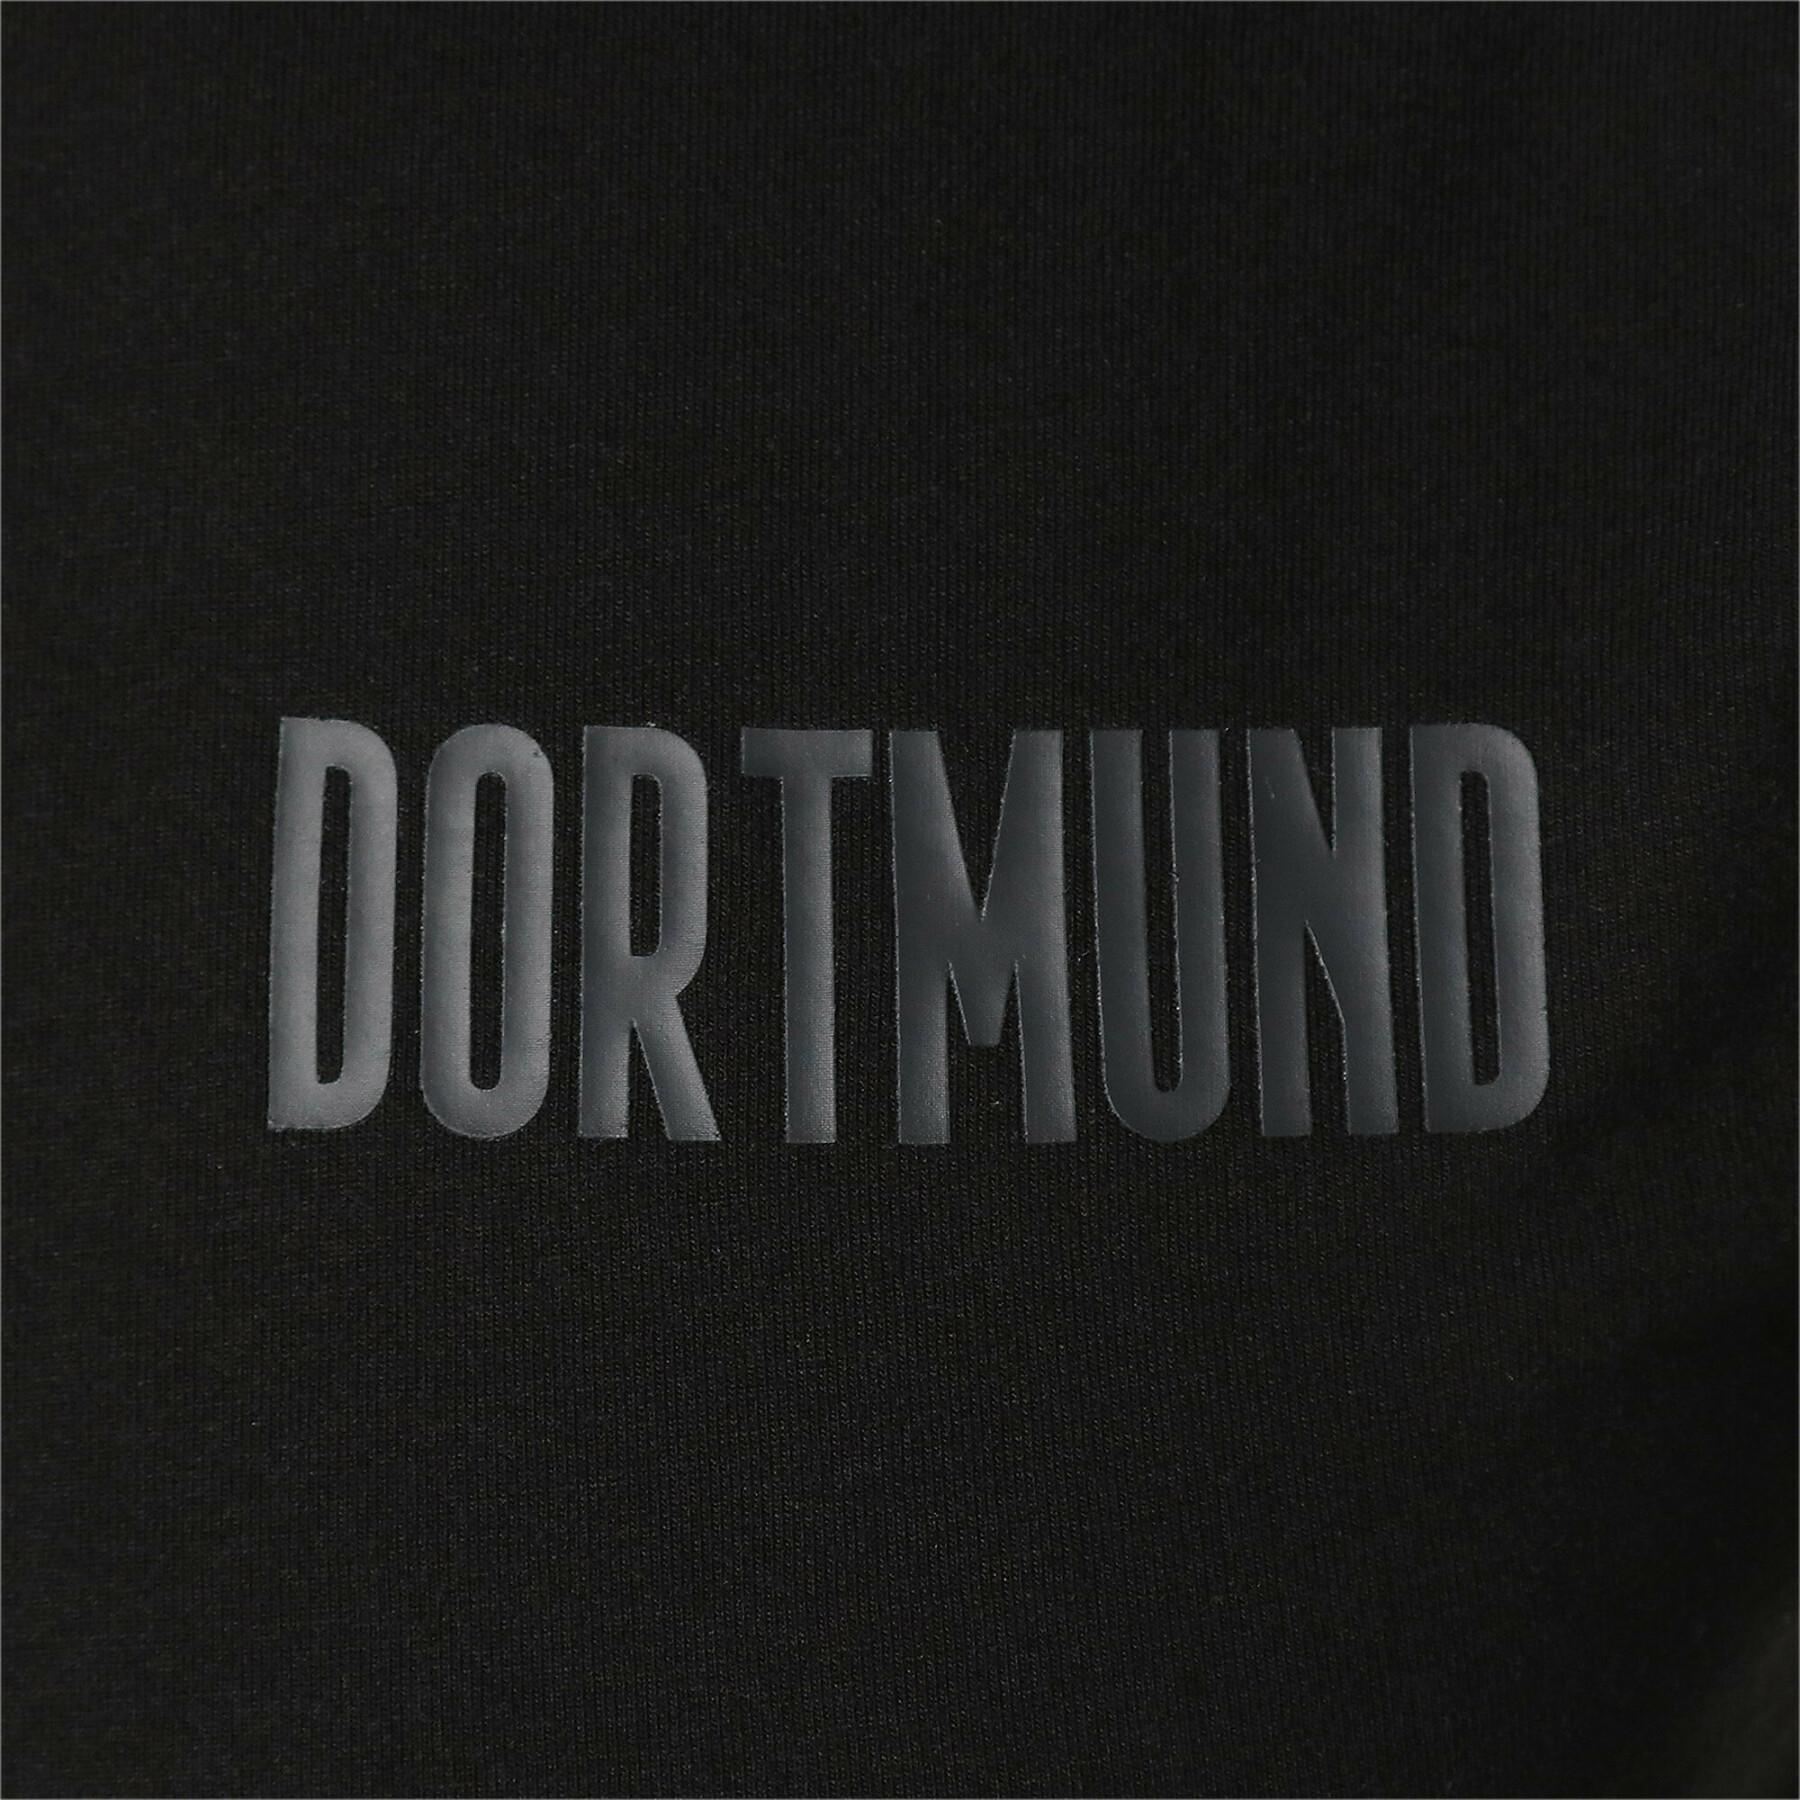 Maglietta Borussia Dortmund Evostripe 2021/22